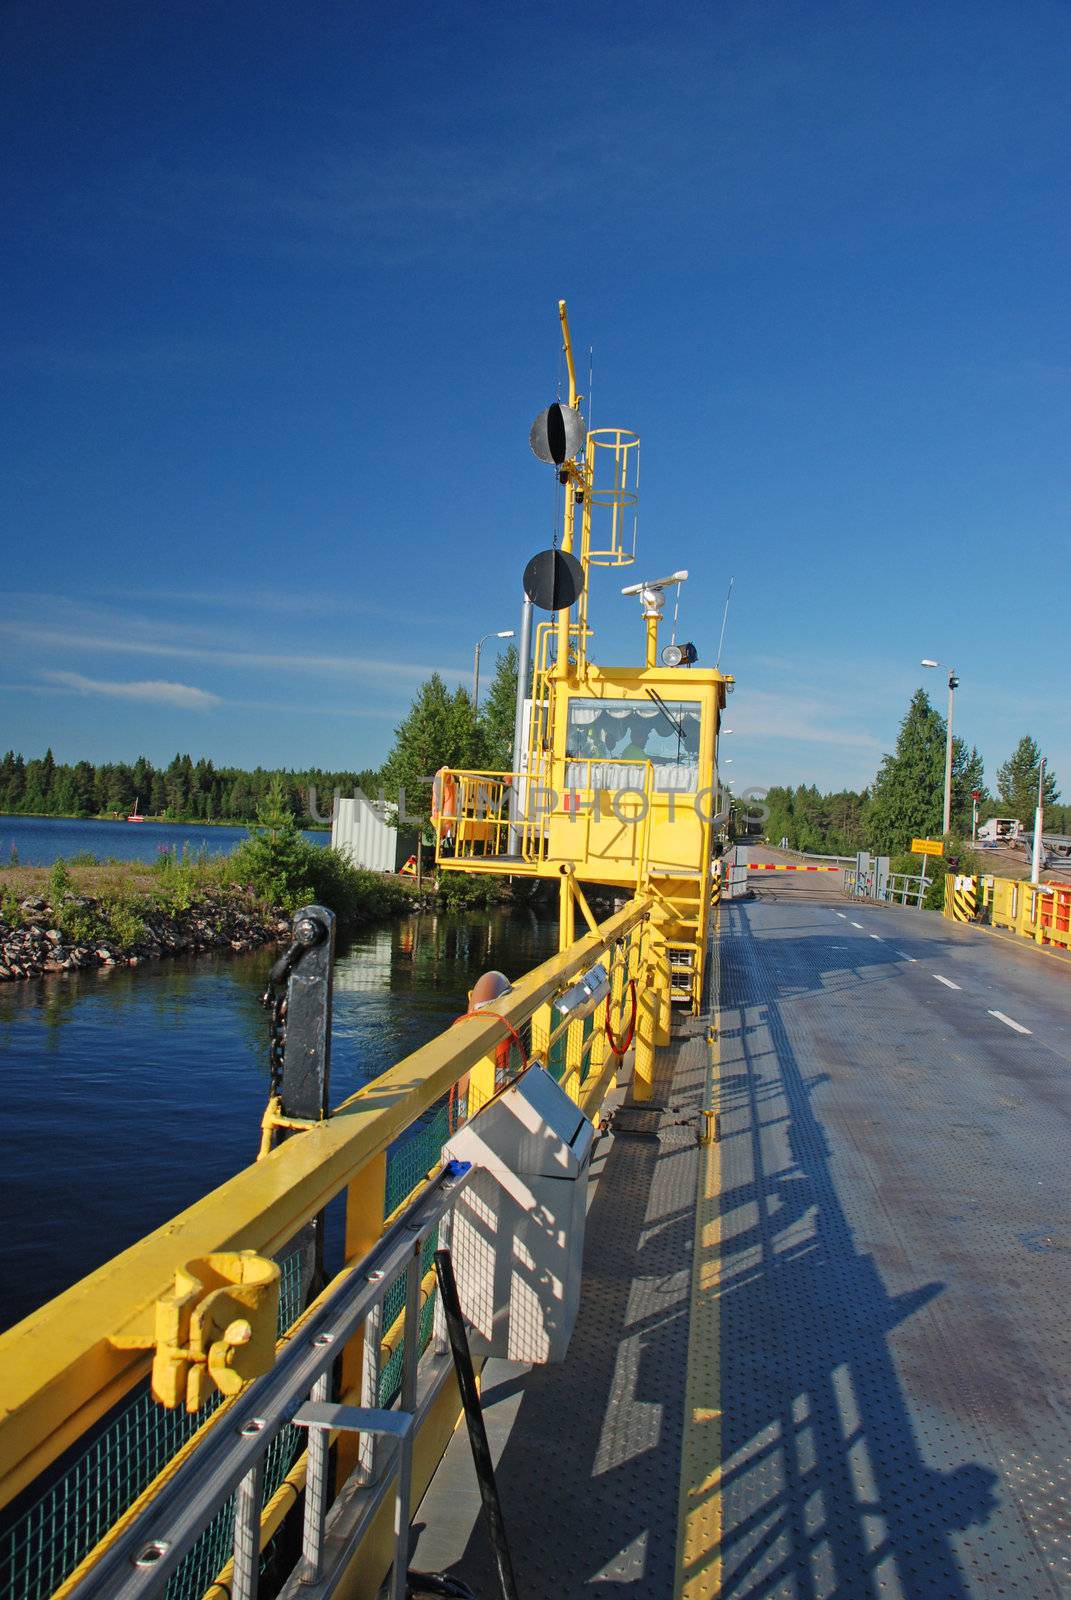 The Alassalmi Ferry before departure on lake Oulujarvi in Finlan by dariya64